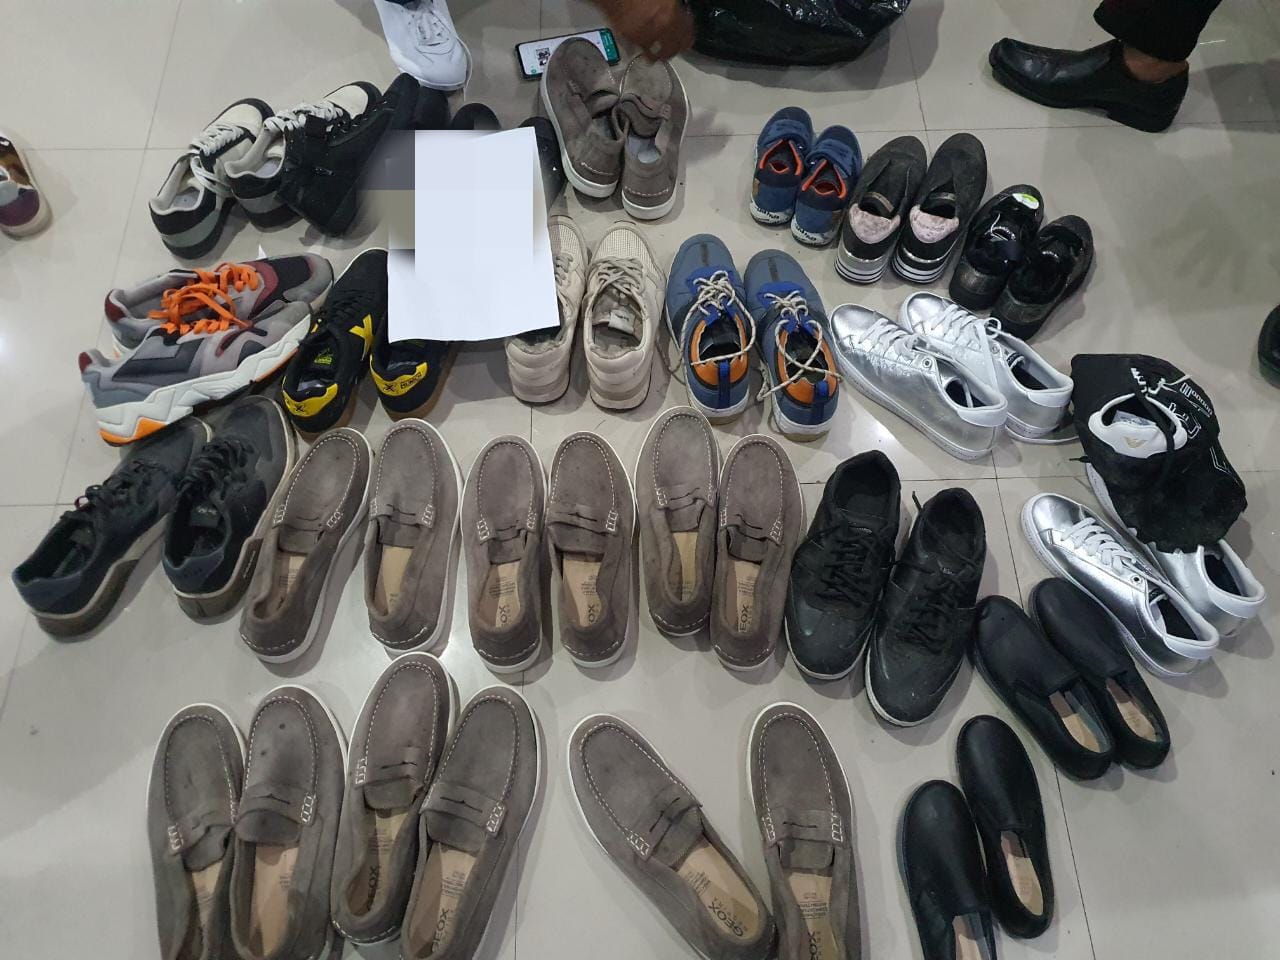 Barang bukti pencurian sepatu di pabrik PT PEI HEI IWI yang diamankan polisi. 